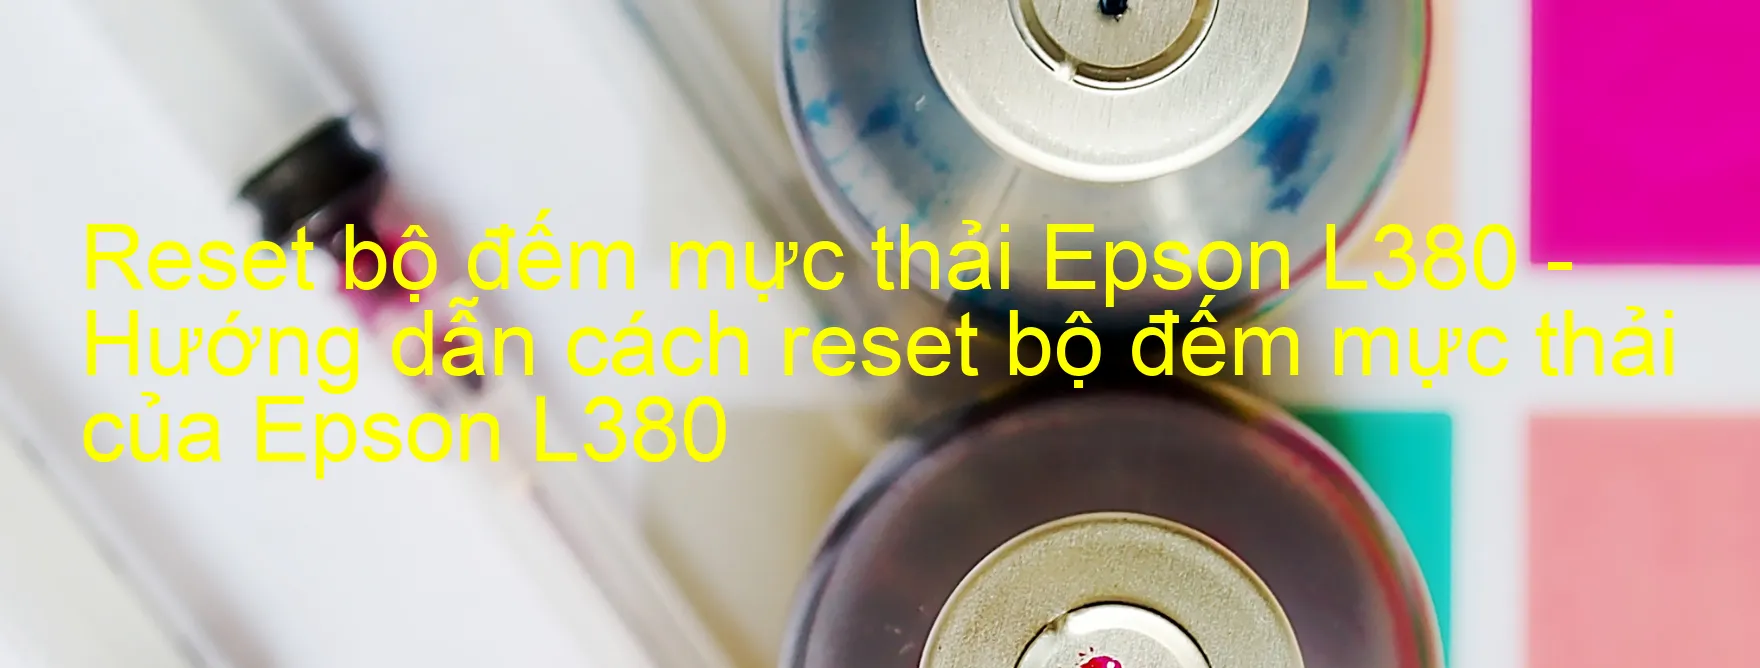 Reset bộ đếm mực thải Epson L380 - Hướng dẫn cách reset bộ đếm mực thải của Epson L380